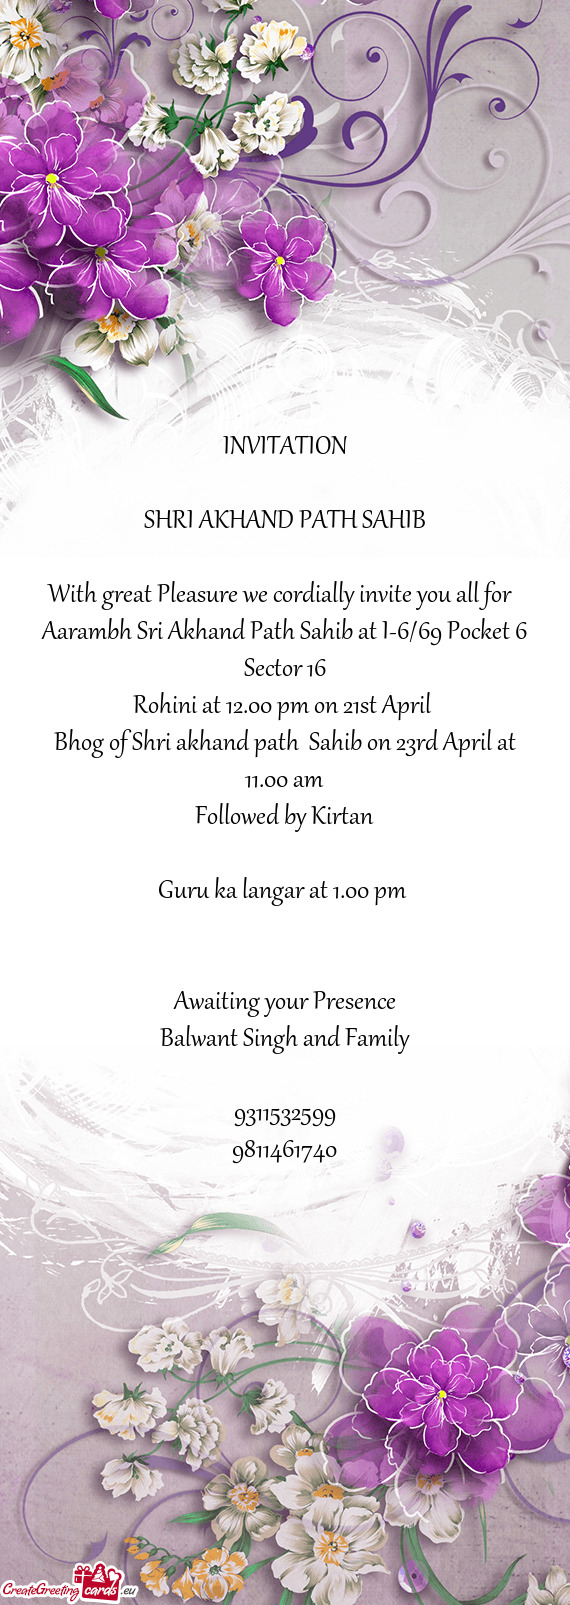 Rohini at 12.00 pm on 21st April